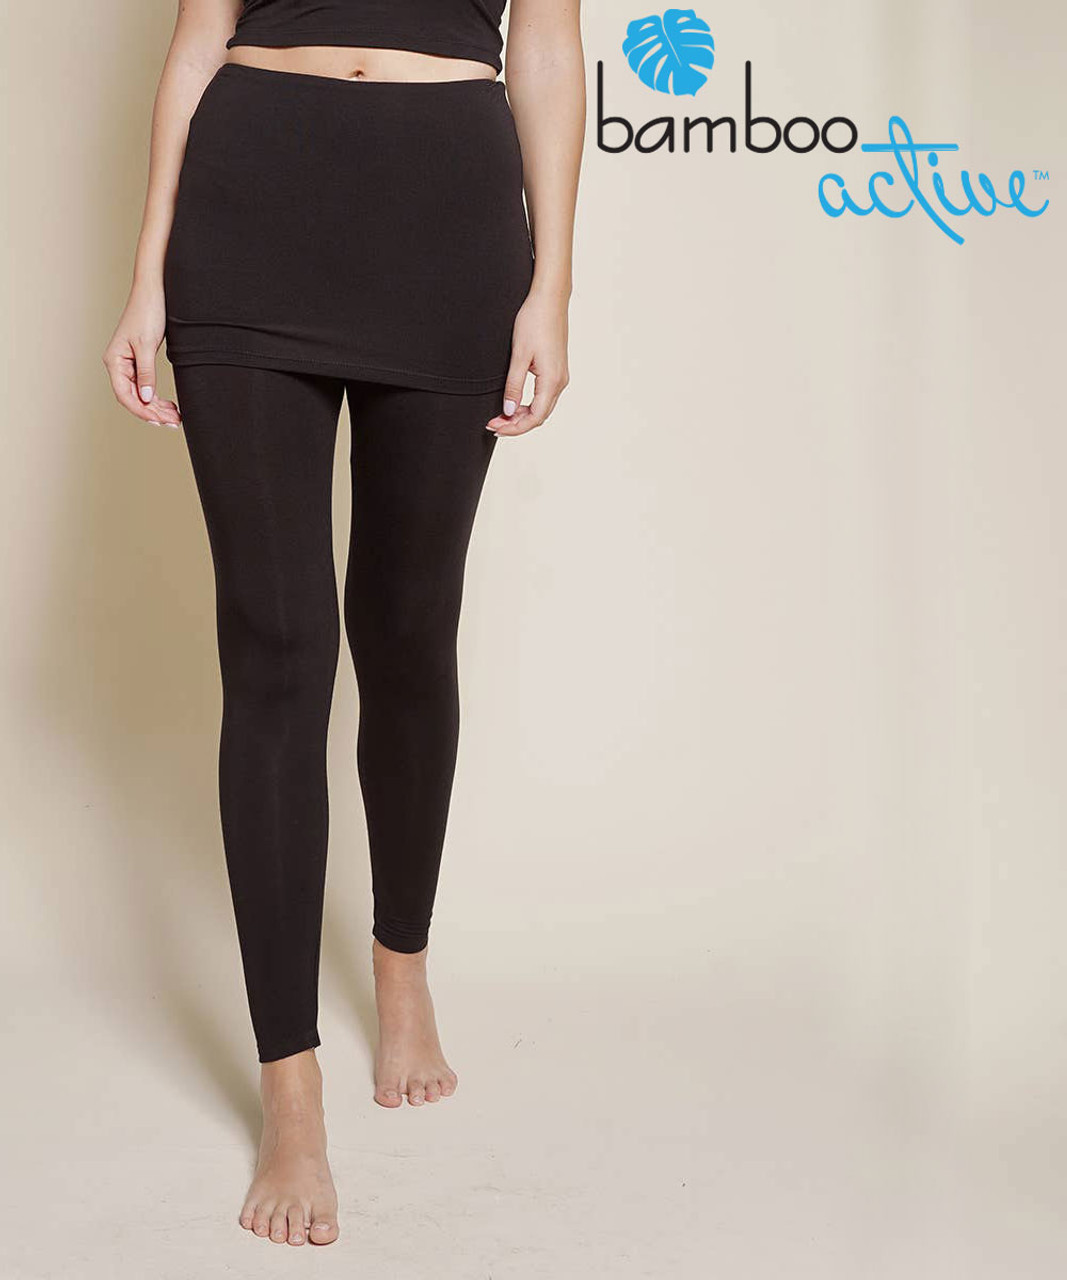 Bamboo Leggings Skirt Attached – Dakota Mae